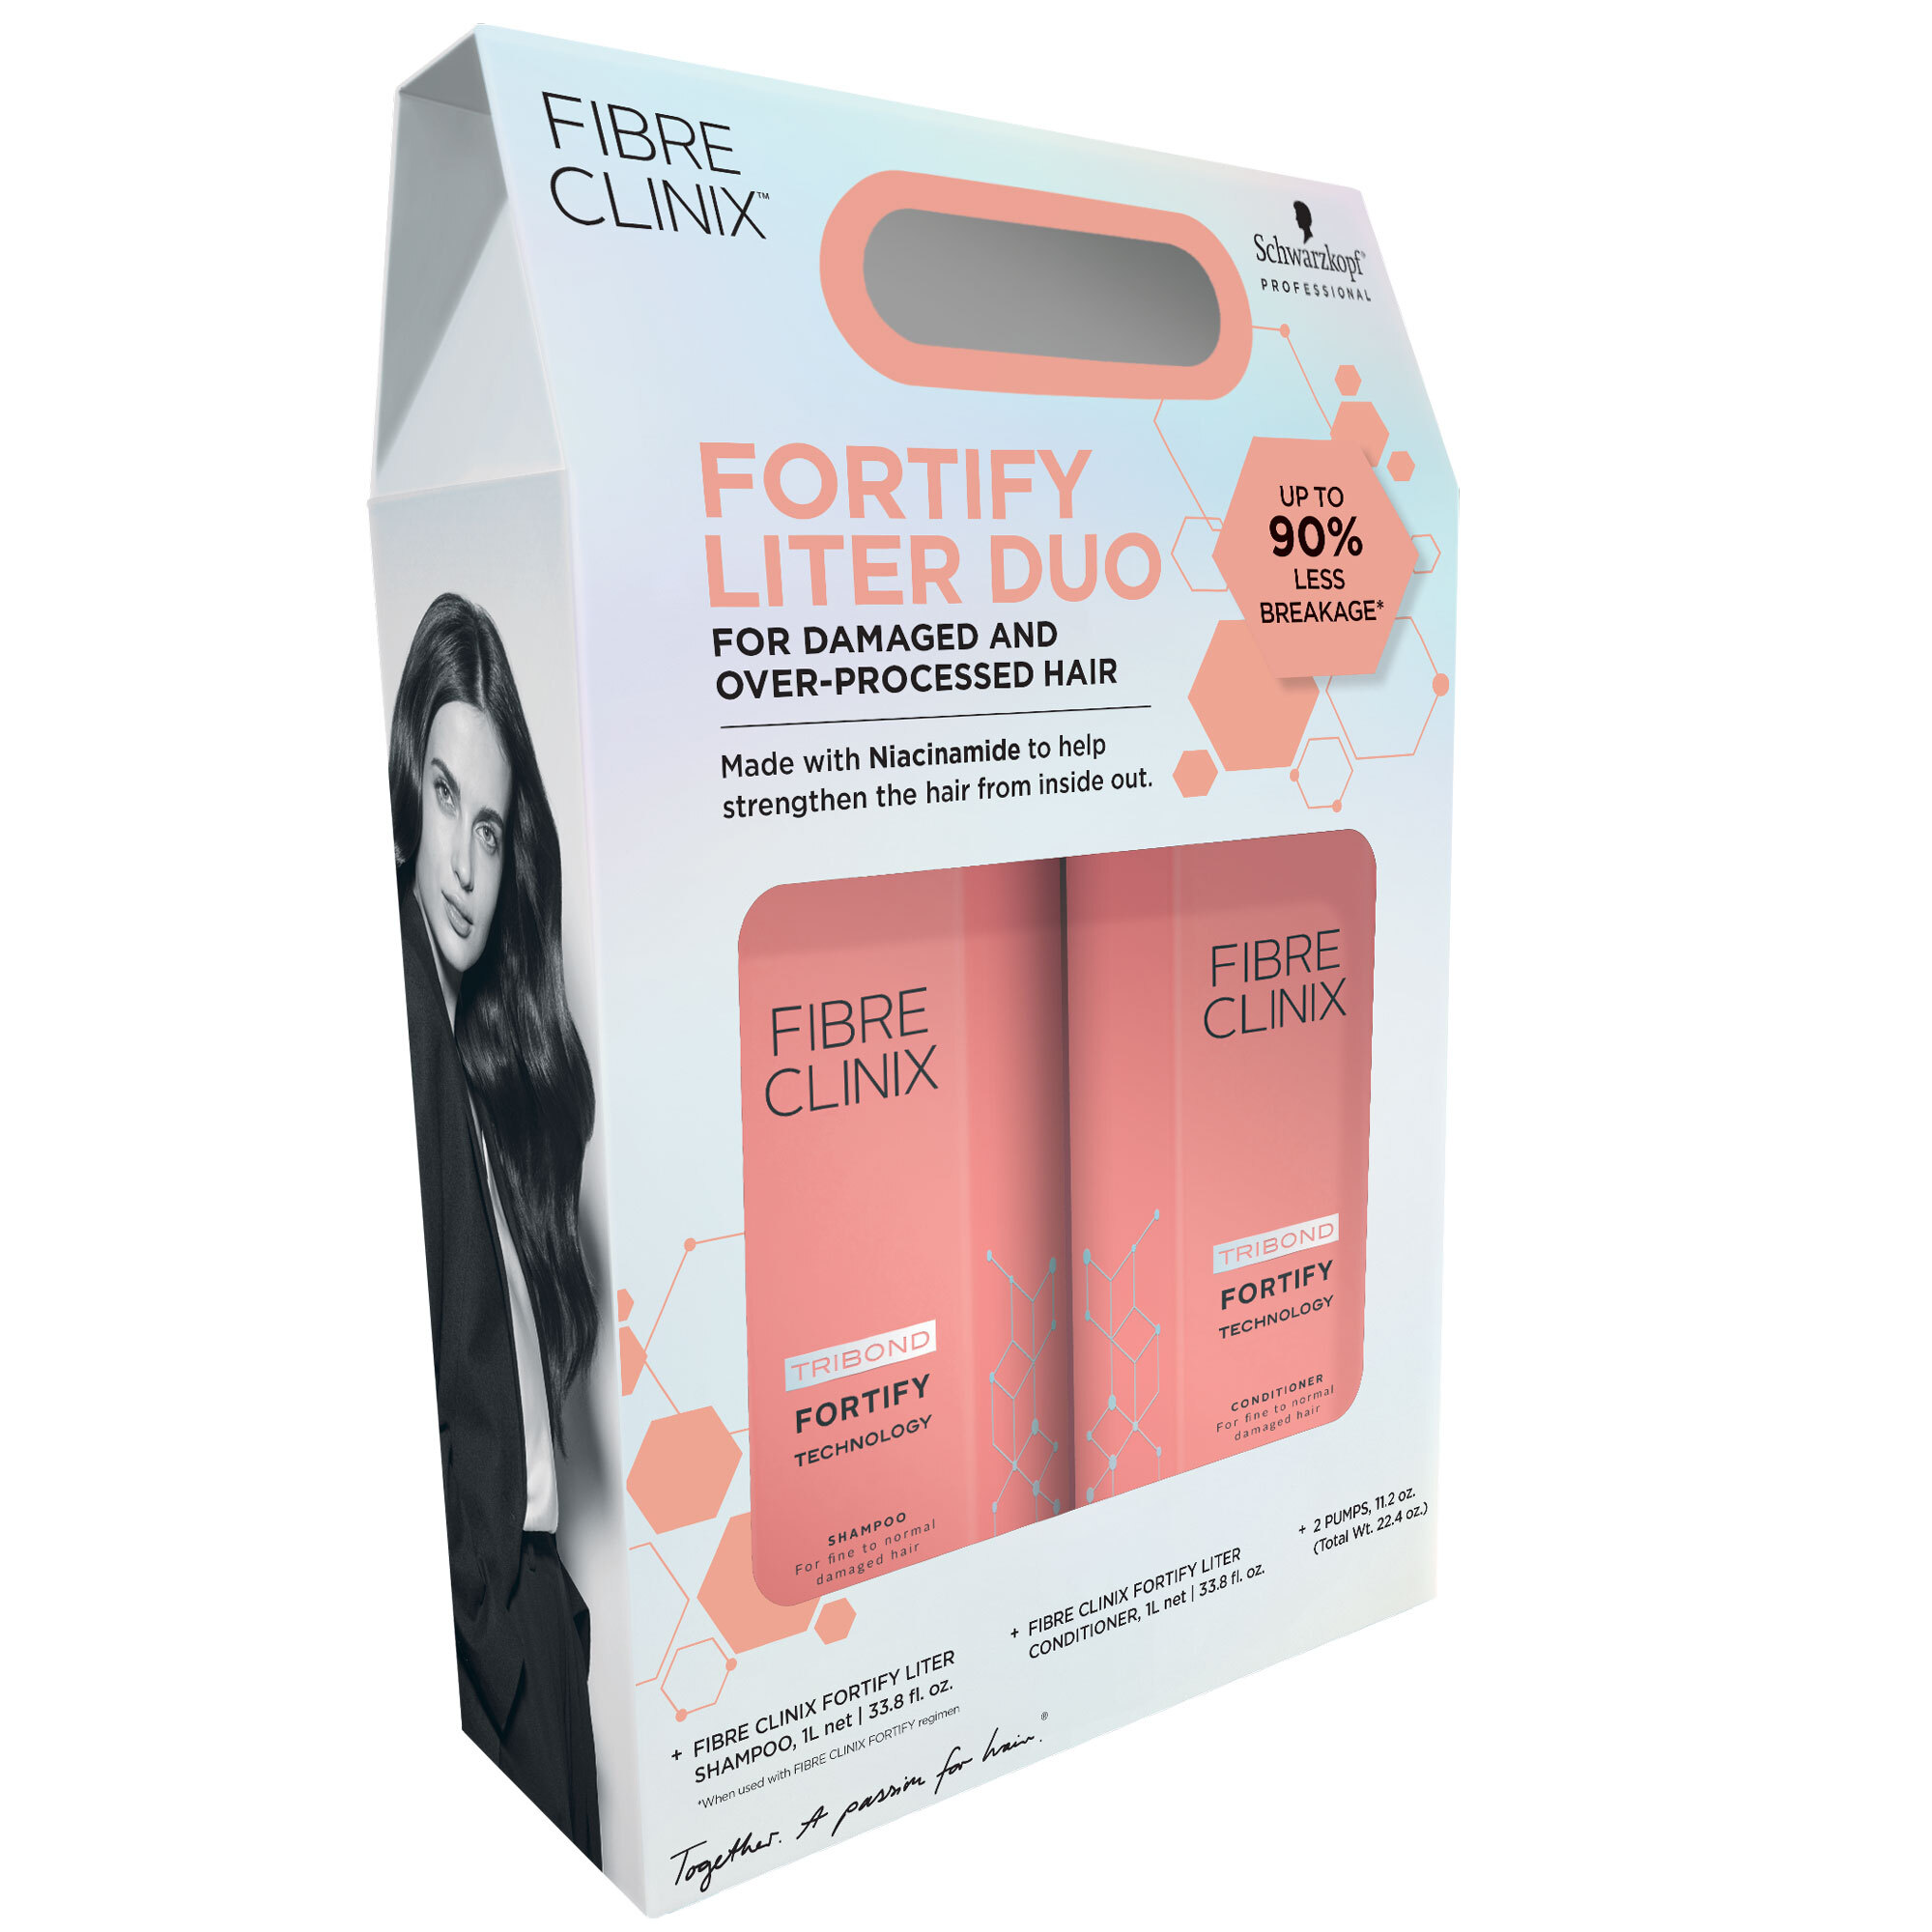 Schwarzkopf FIBRE CLINIX® Fortify Shampoo and Conditioner Liter Duo